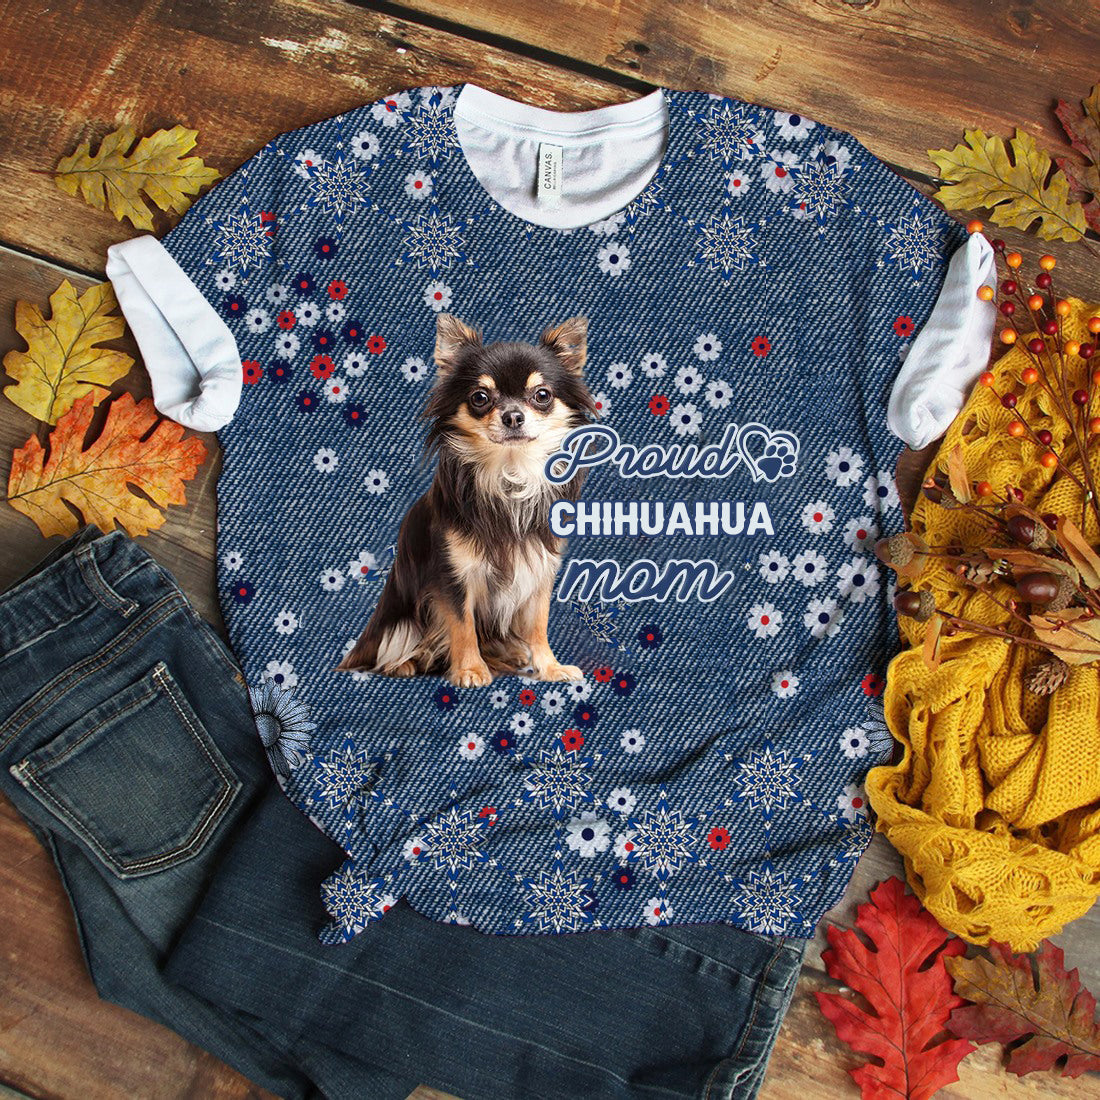 Chihuahua-Pround Mom T-shirt